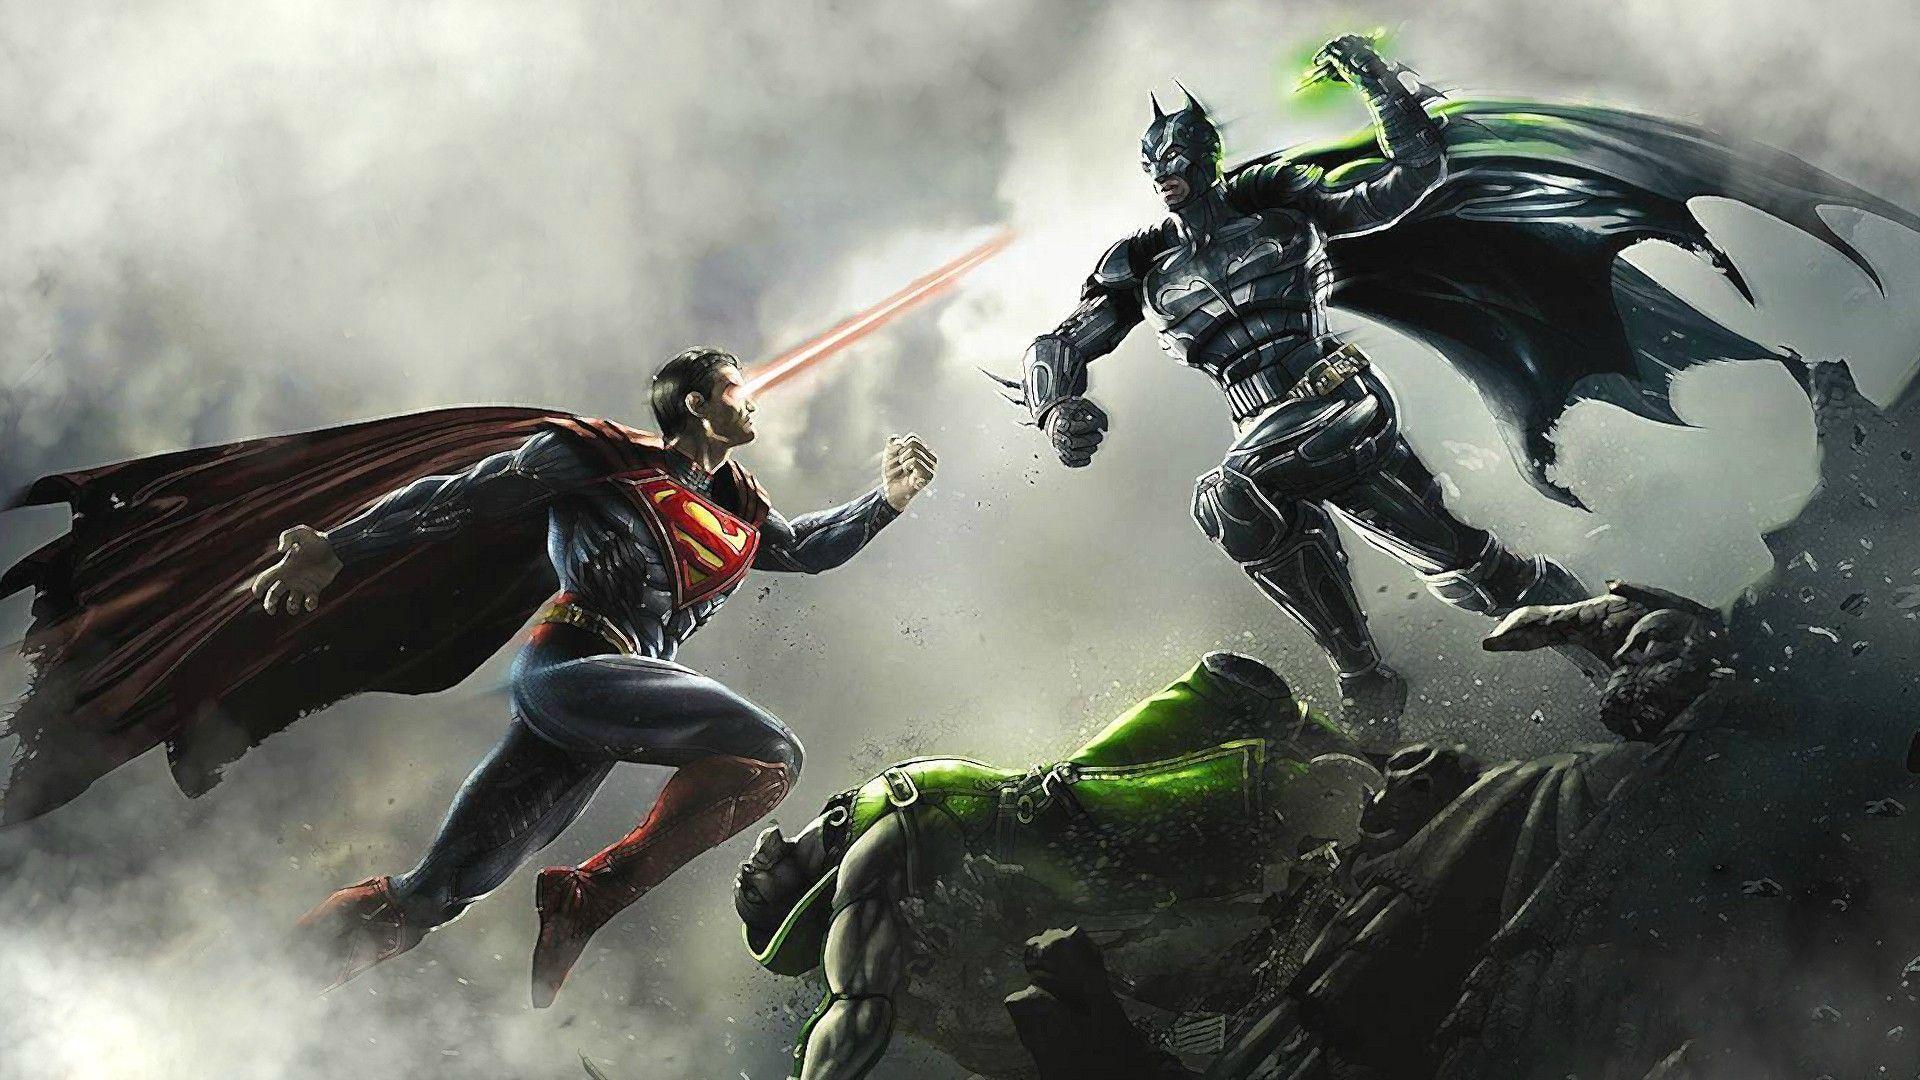 In light of the Batman vs Superman movie, here's a sick wallpaper